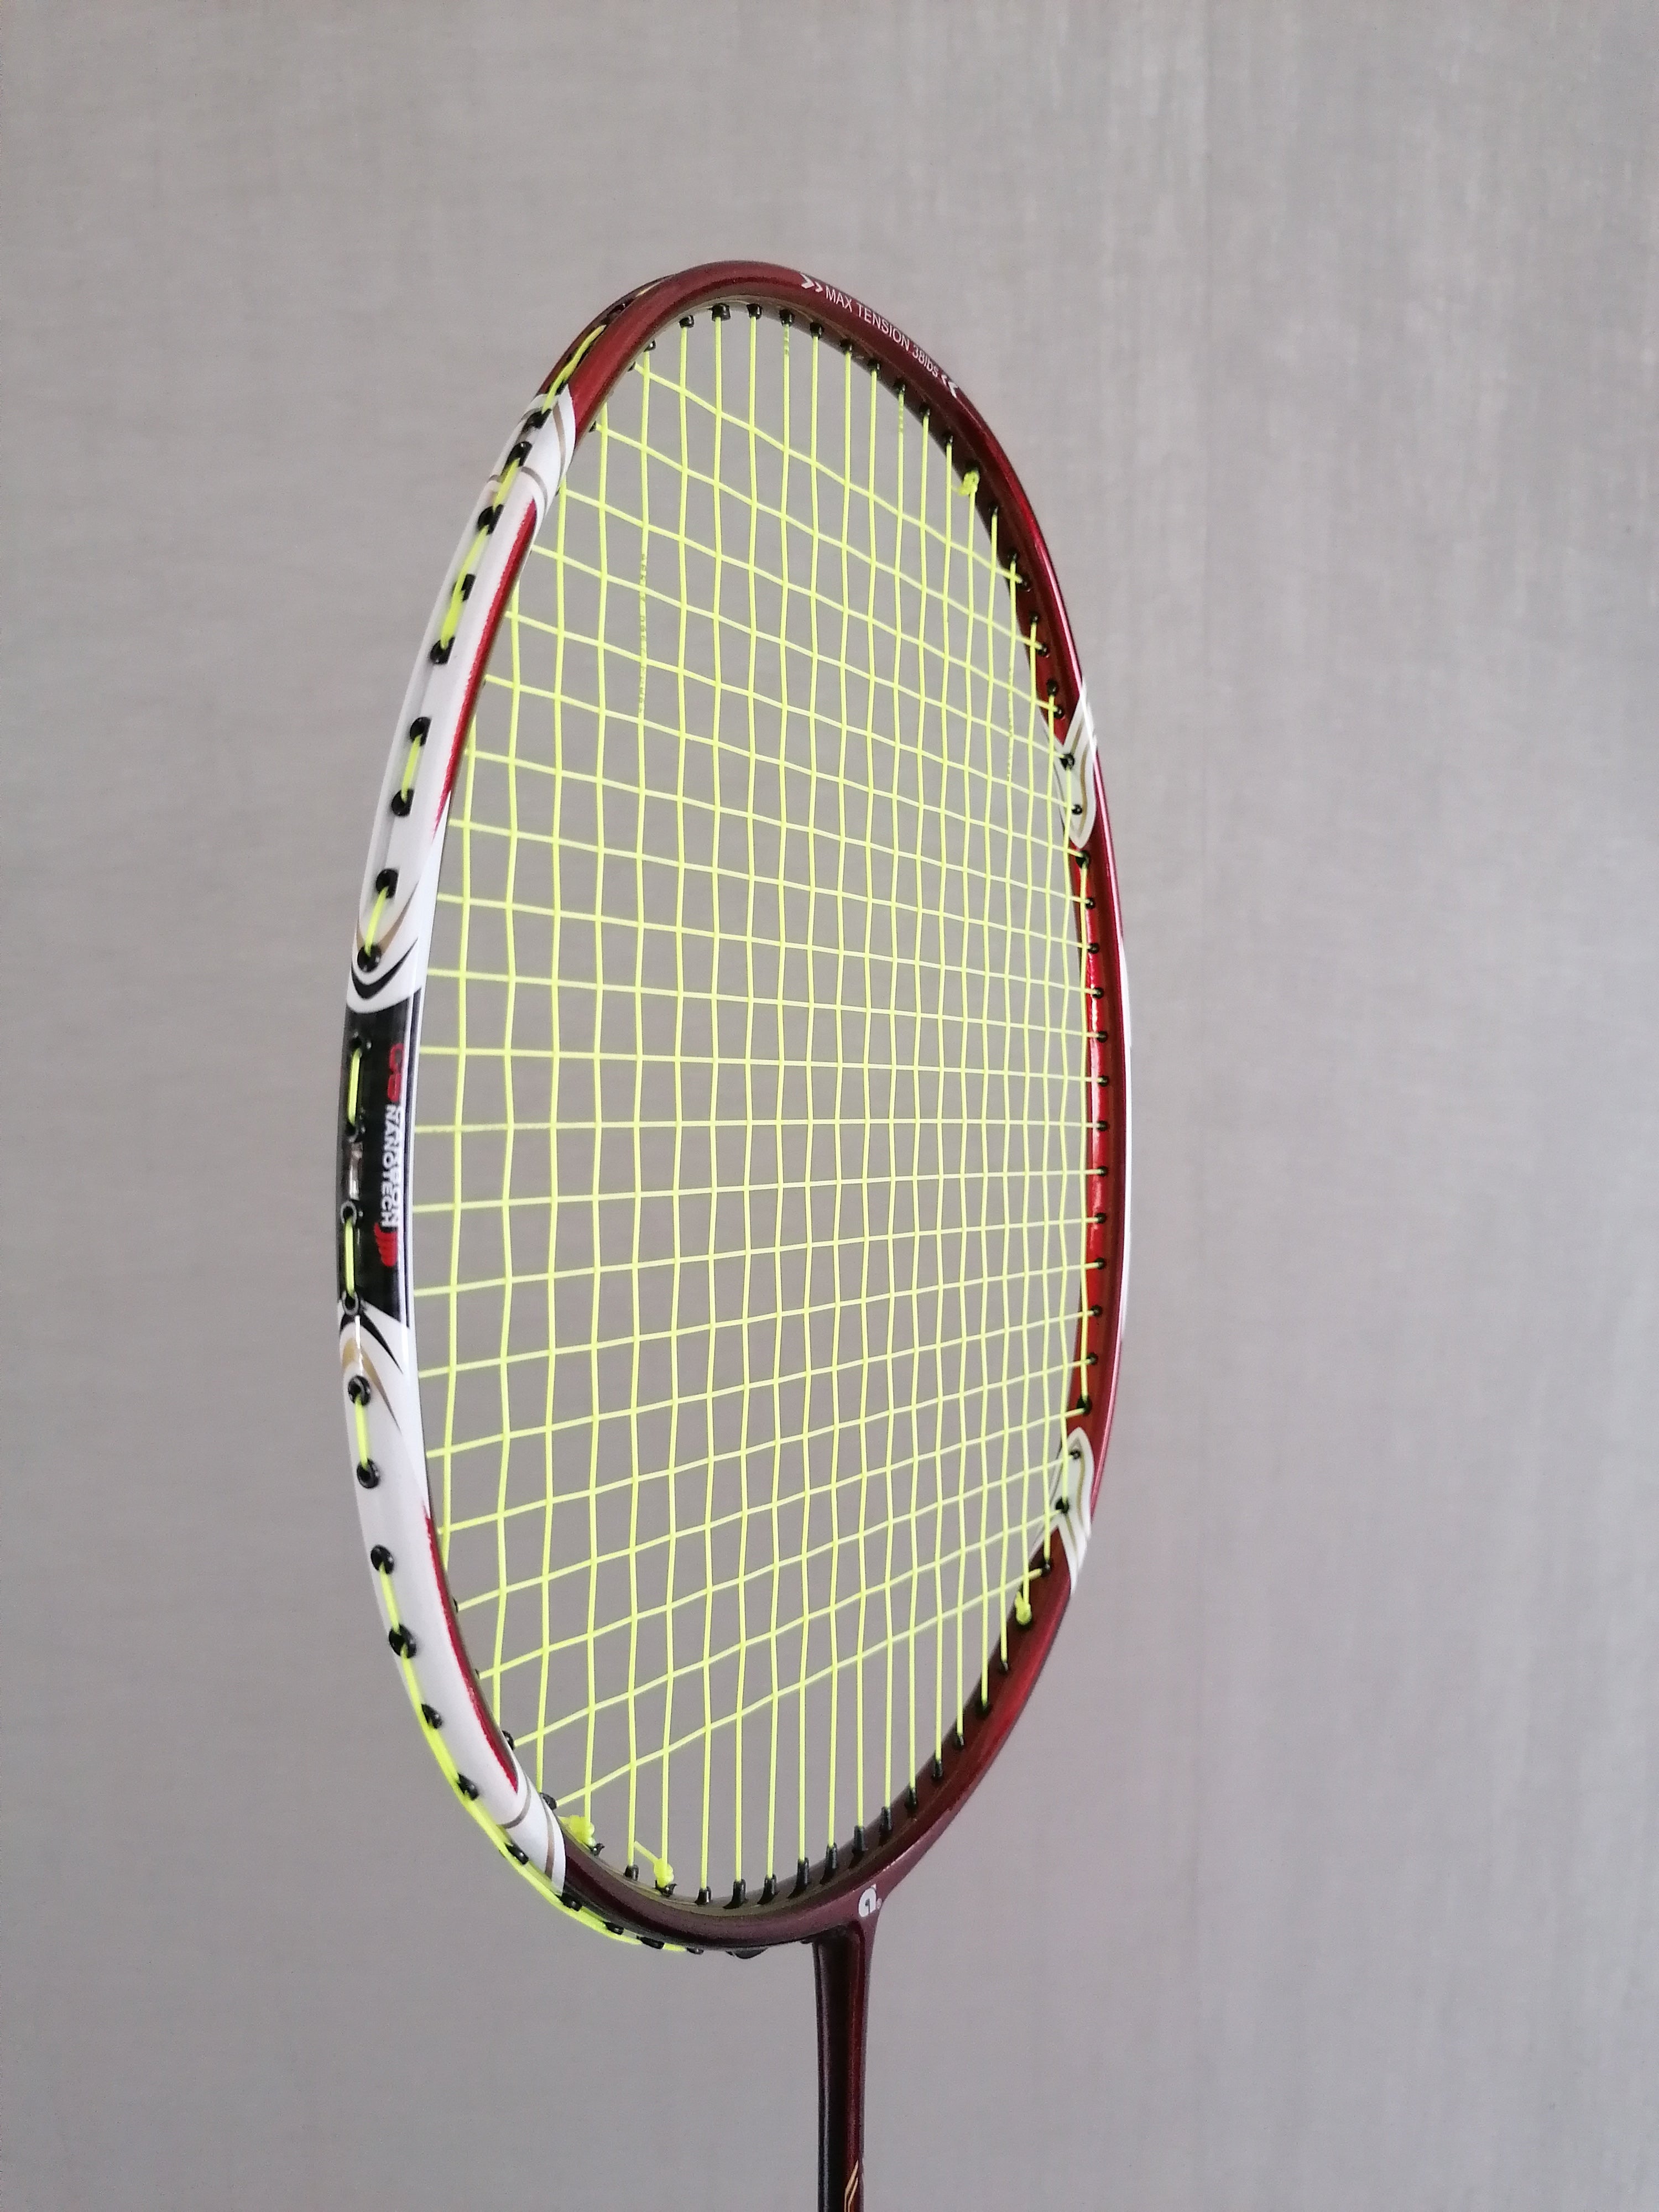 Apacs Edgesaber 10 badminton racket badminton racket review